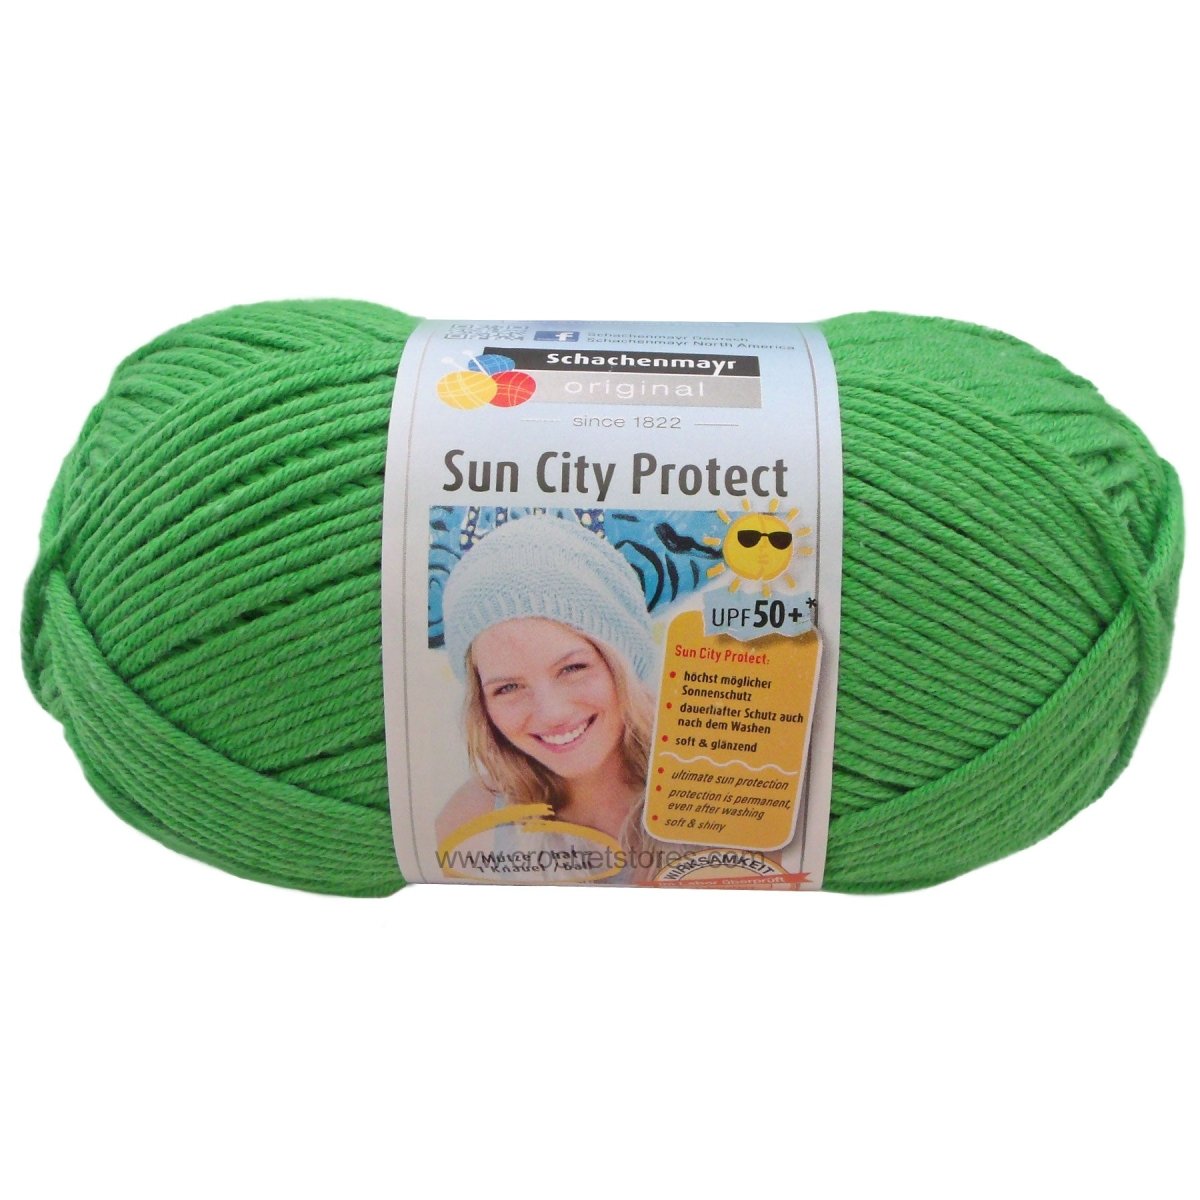 SUN CITY PROTECT - Crochetstores9807778-4704053859018913